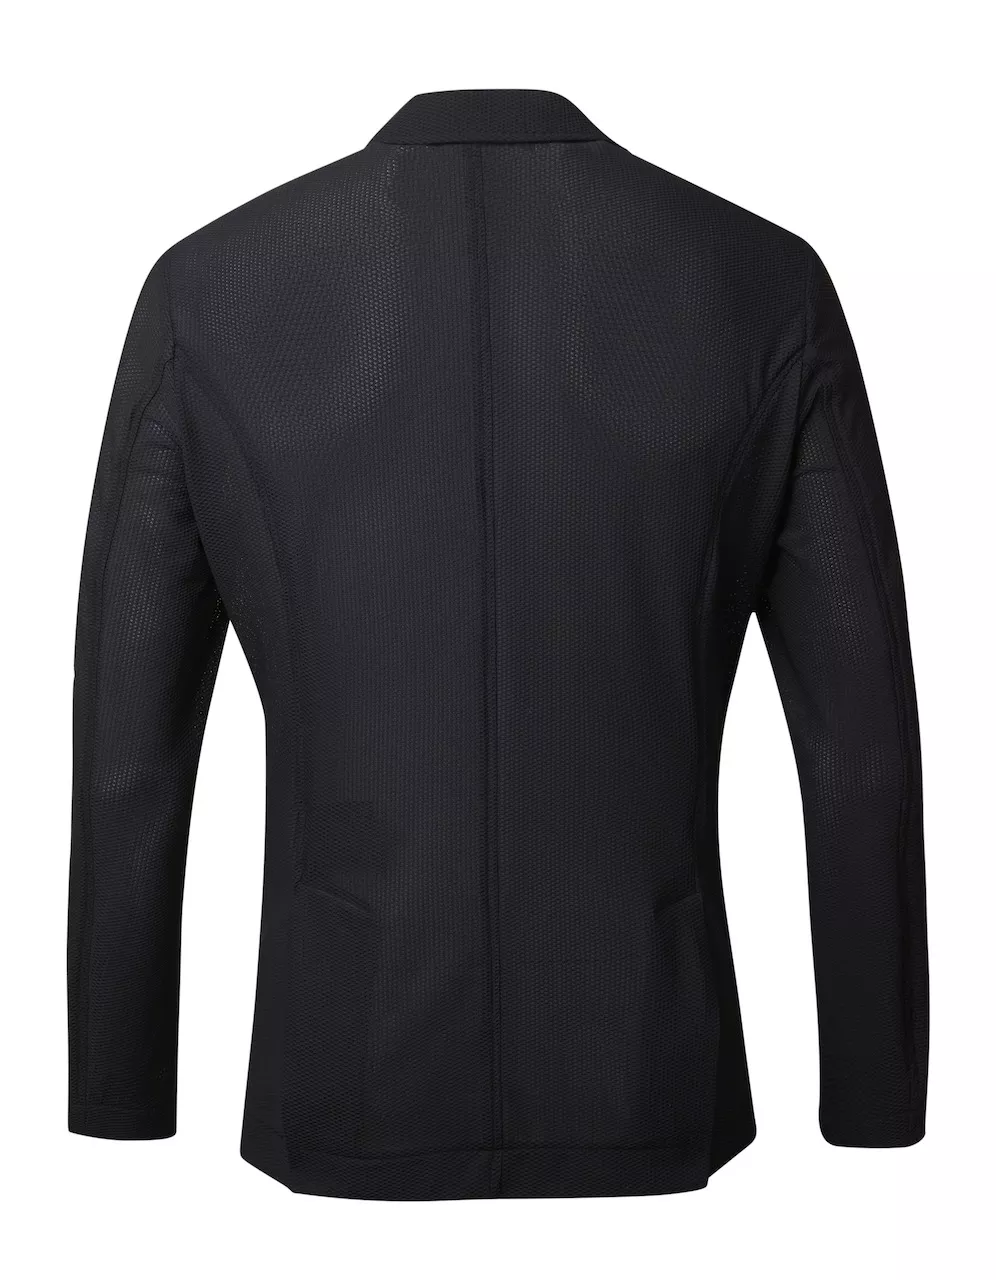 Albanese - Tournament jacket "Motion Lite Men", black